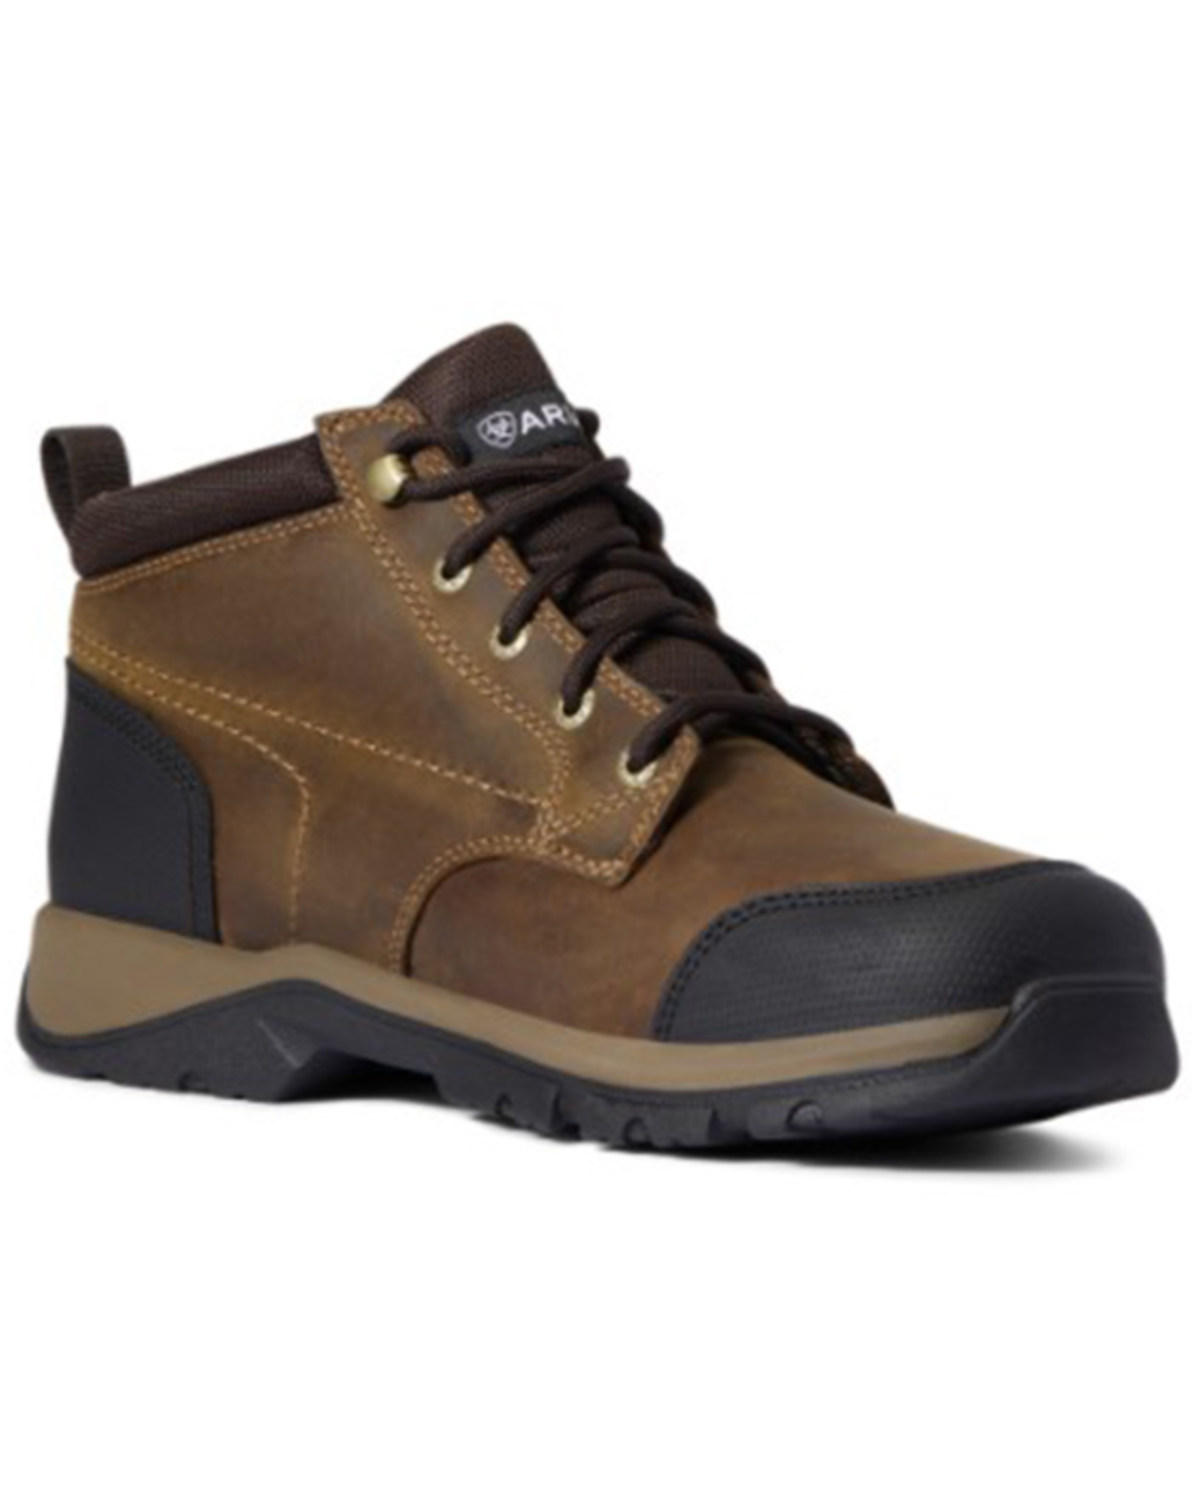 Ariat Men's Farmland Waterproof Hiking Boots - Soft Toe